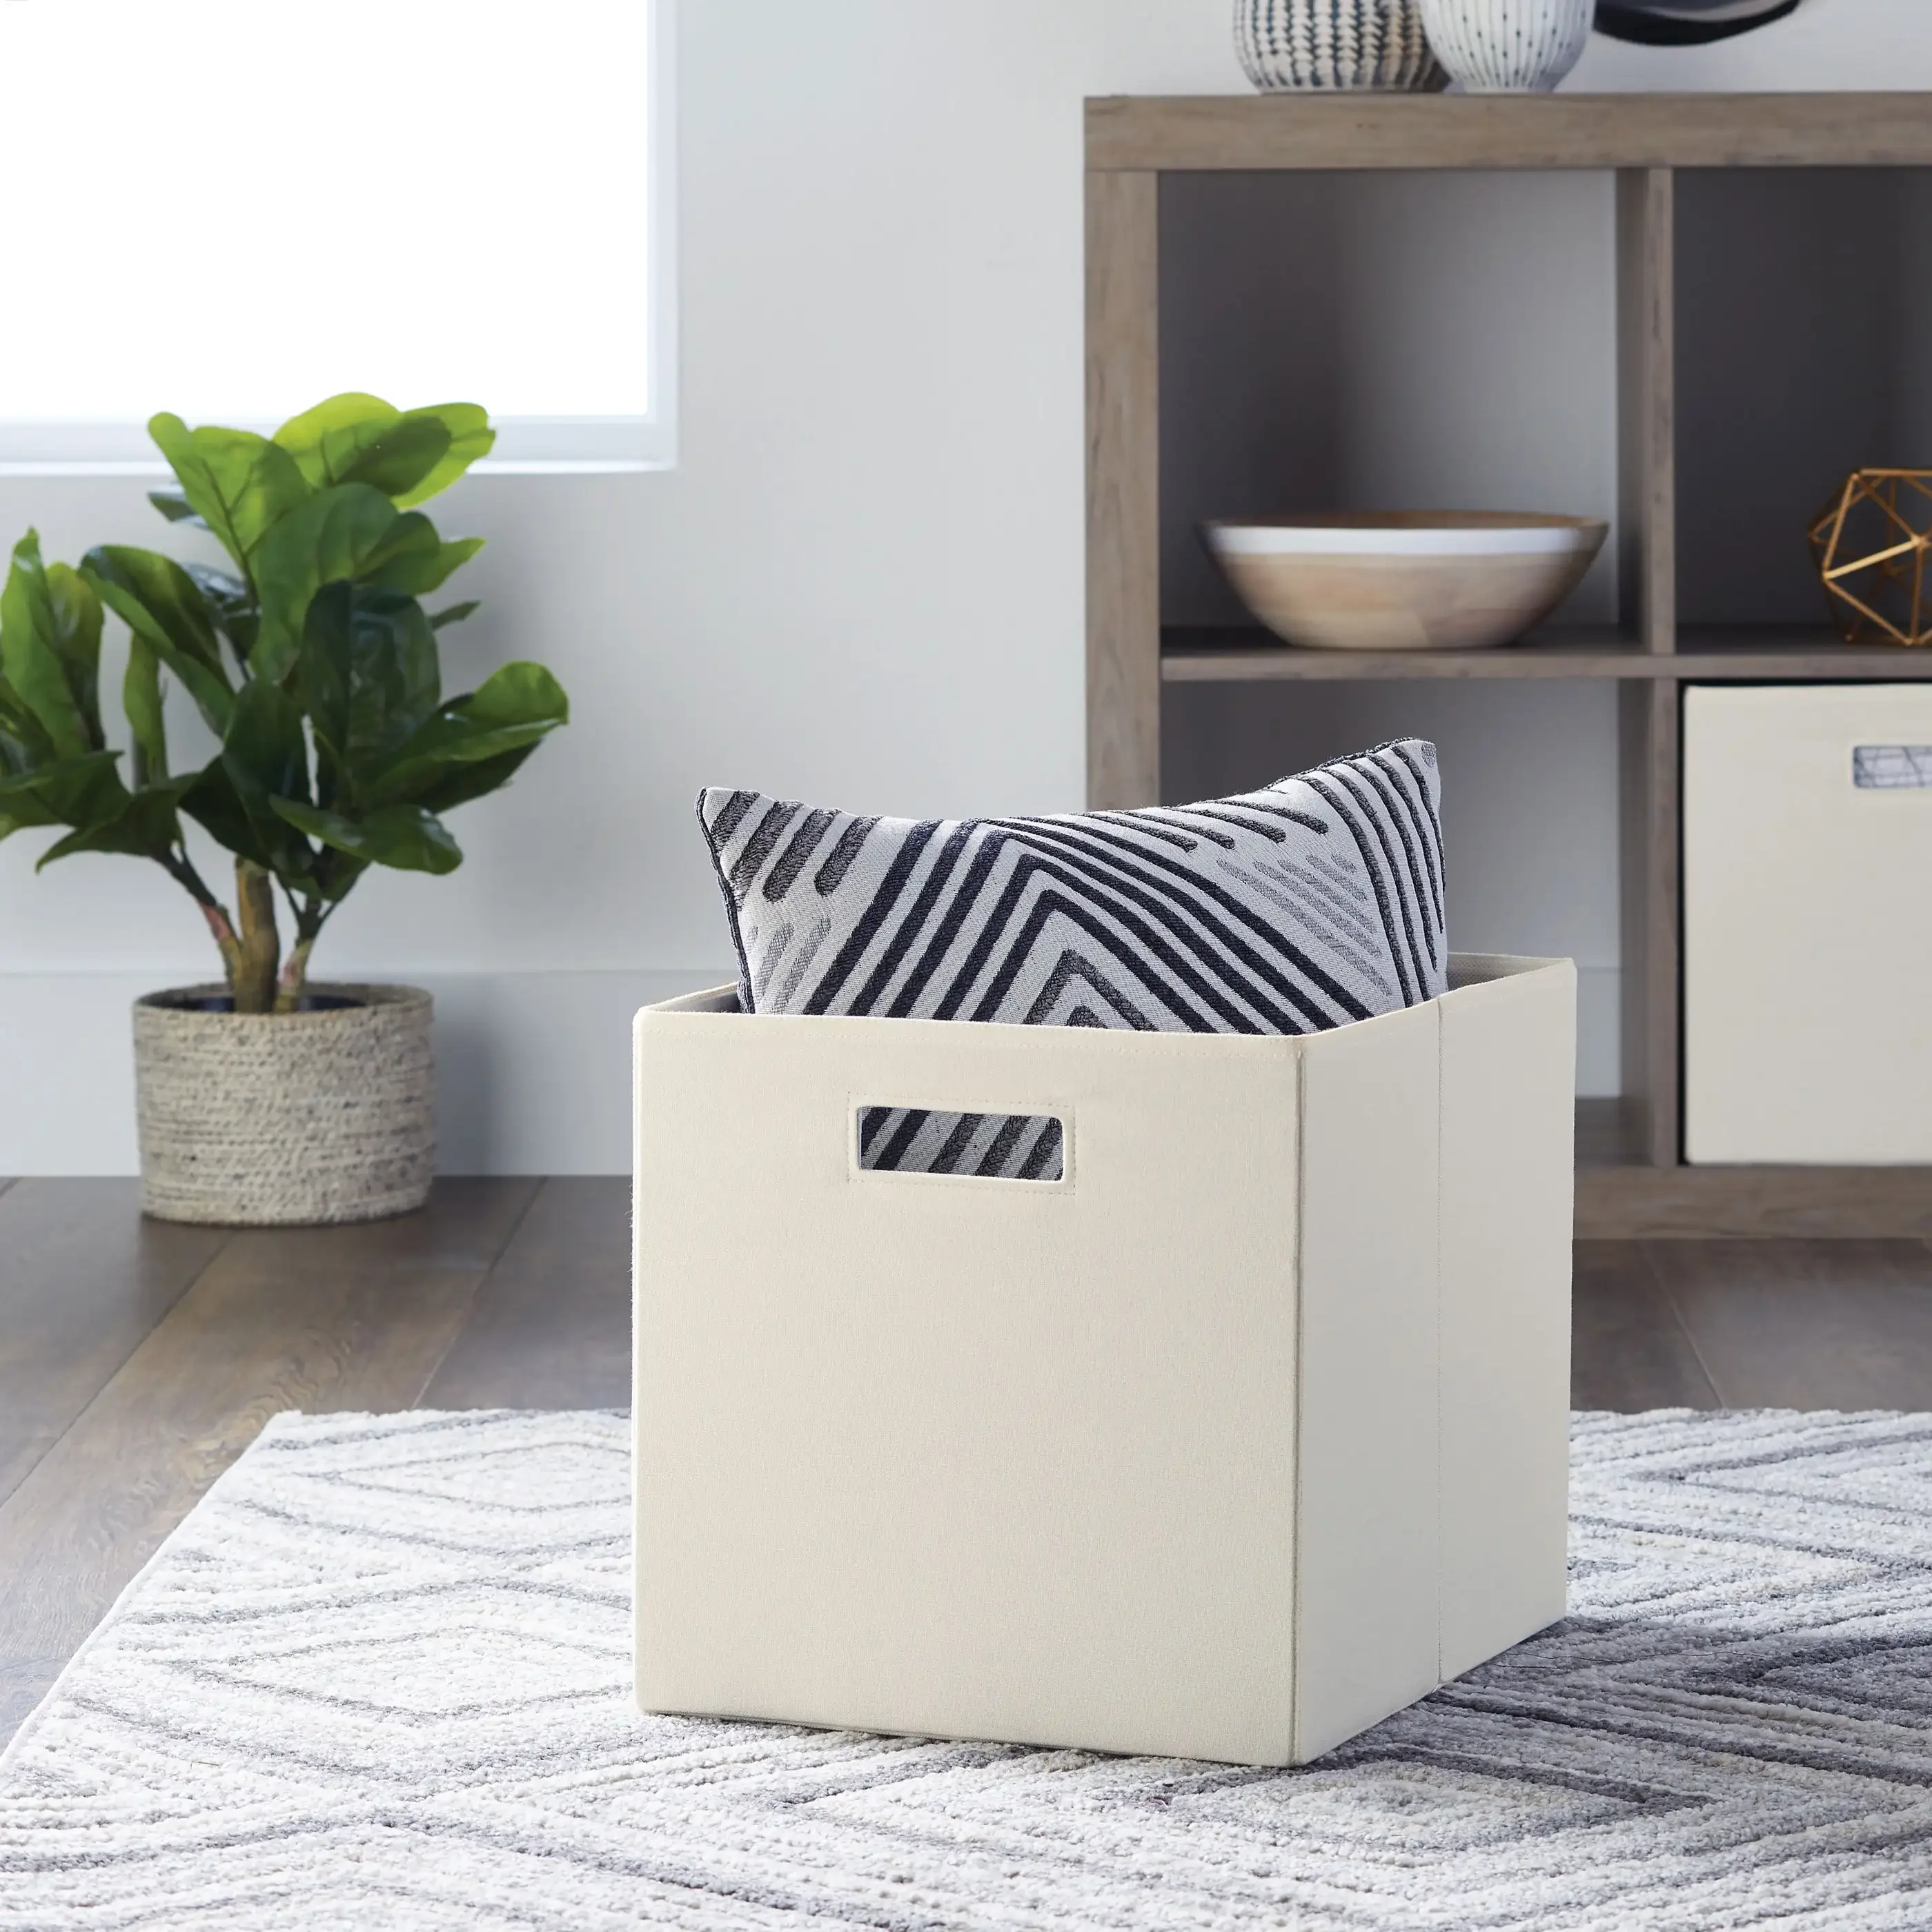 

Home Organization and Storage Fabric Storage Bins (12.75" X 12.75"), Ivory, 2 Pack Laundry Basket Rapid Transit Clothes Storage